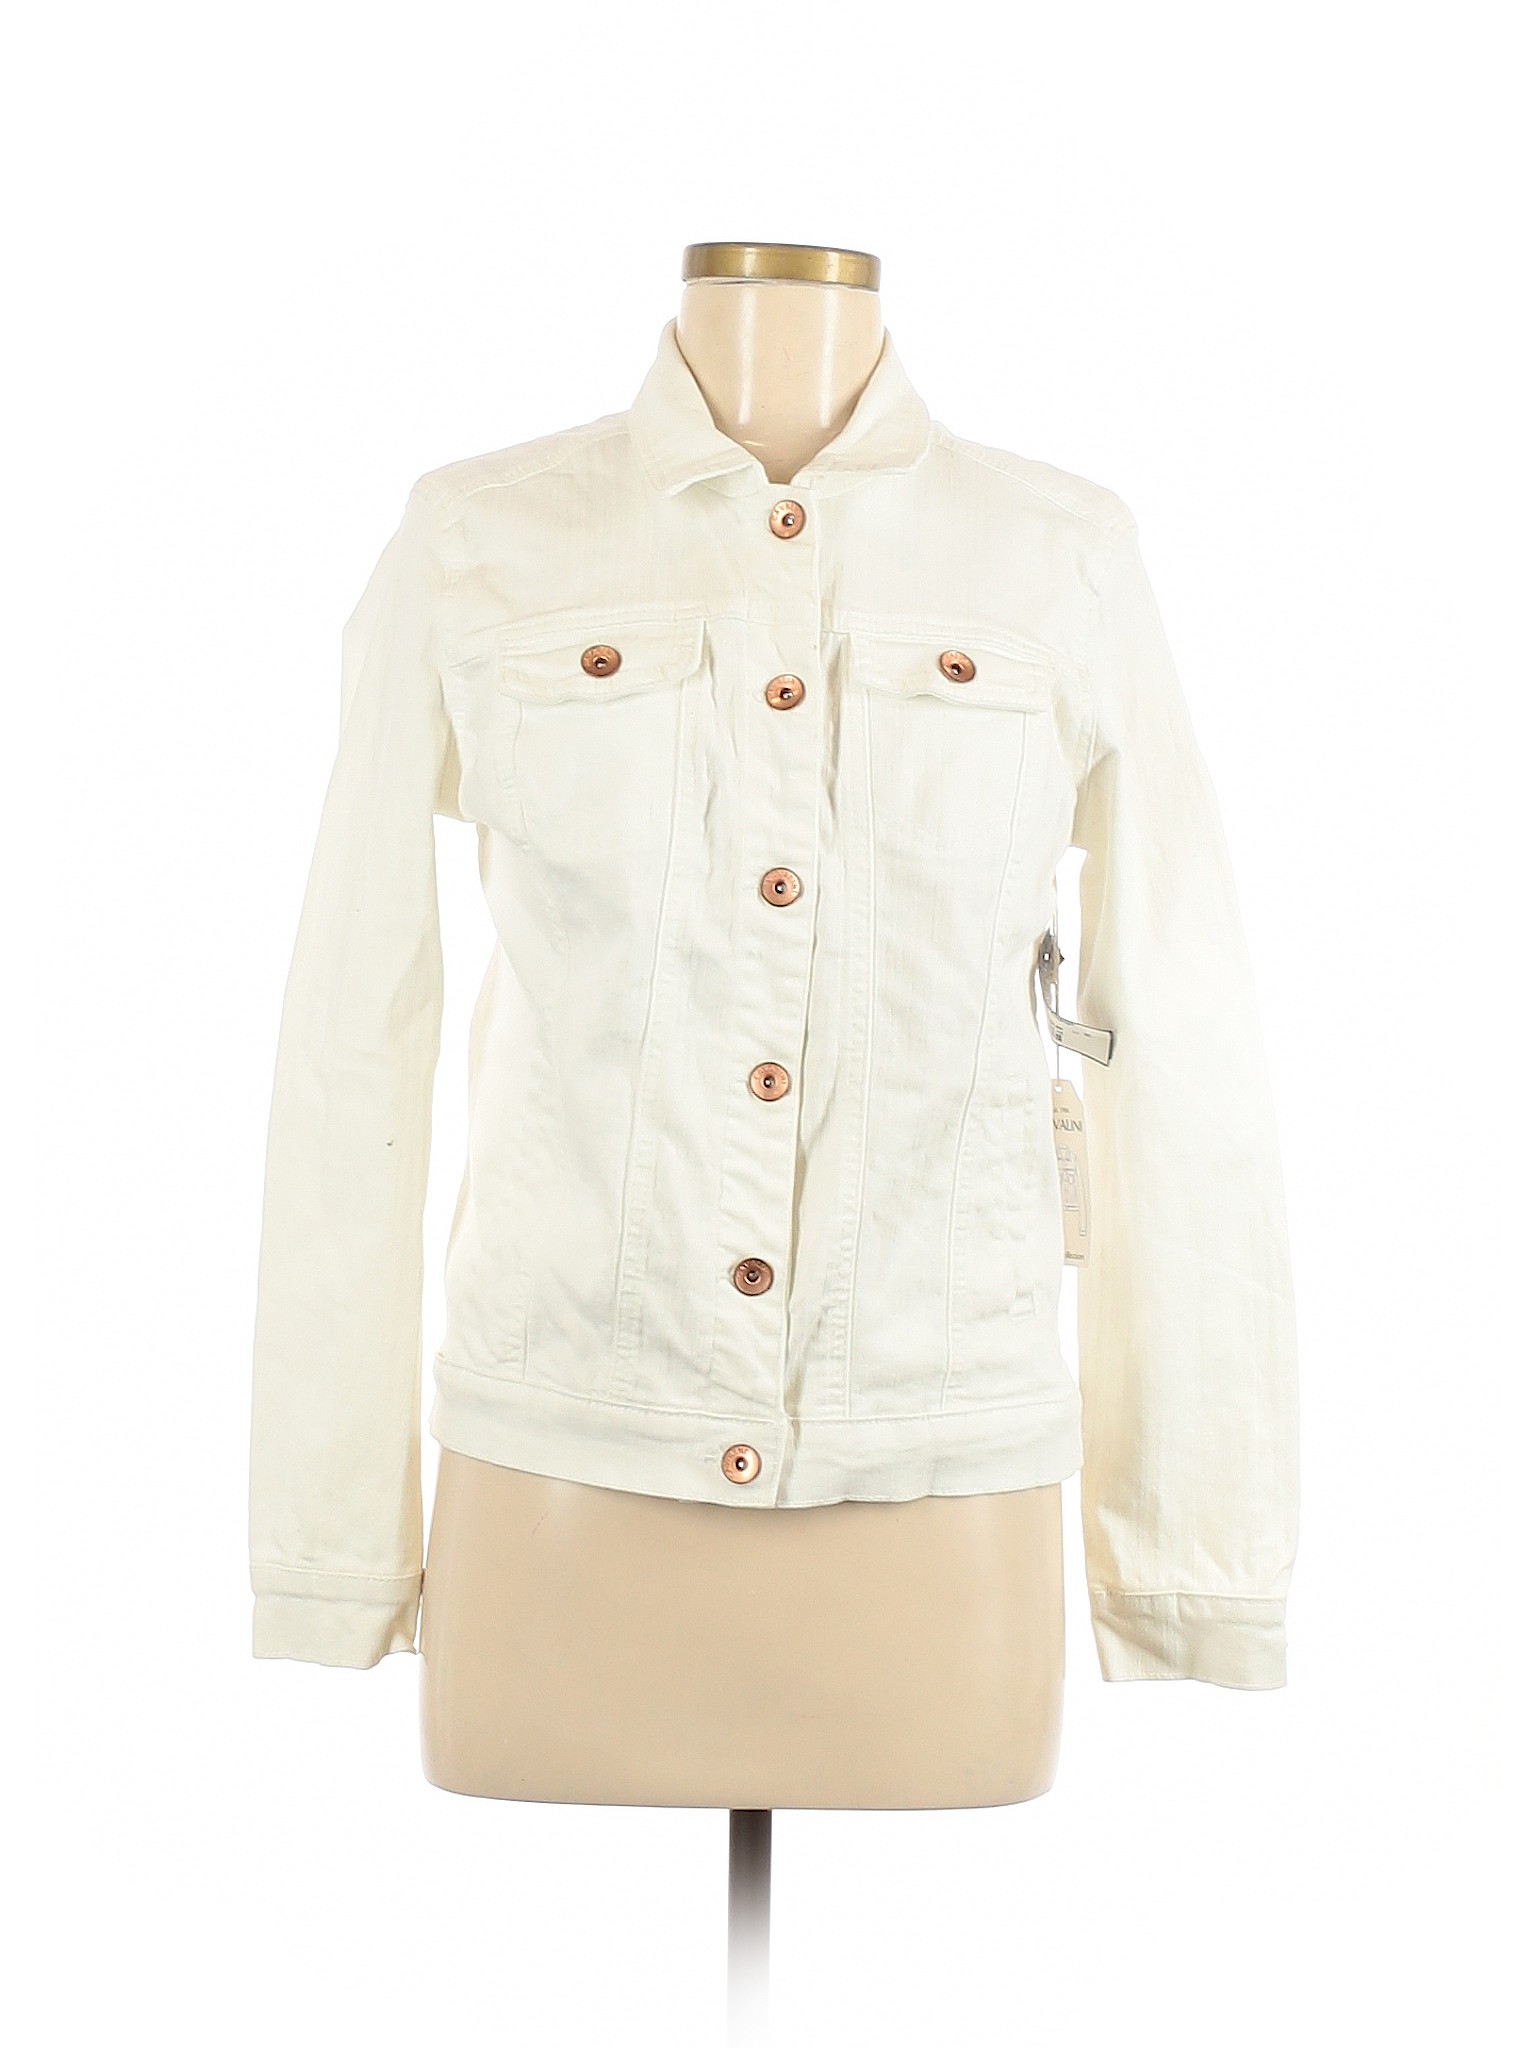 Cavalini Denim Collection Solid Ivory White Denim Jacket Size M - 59% ...